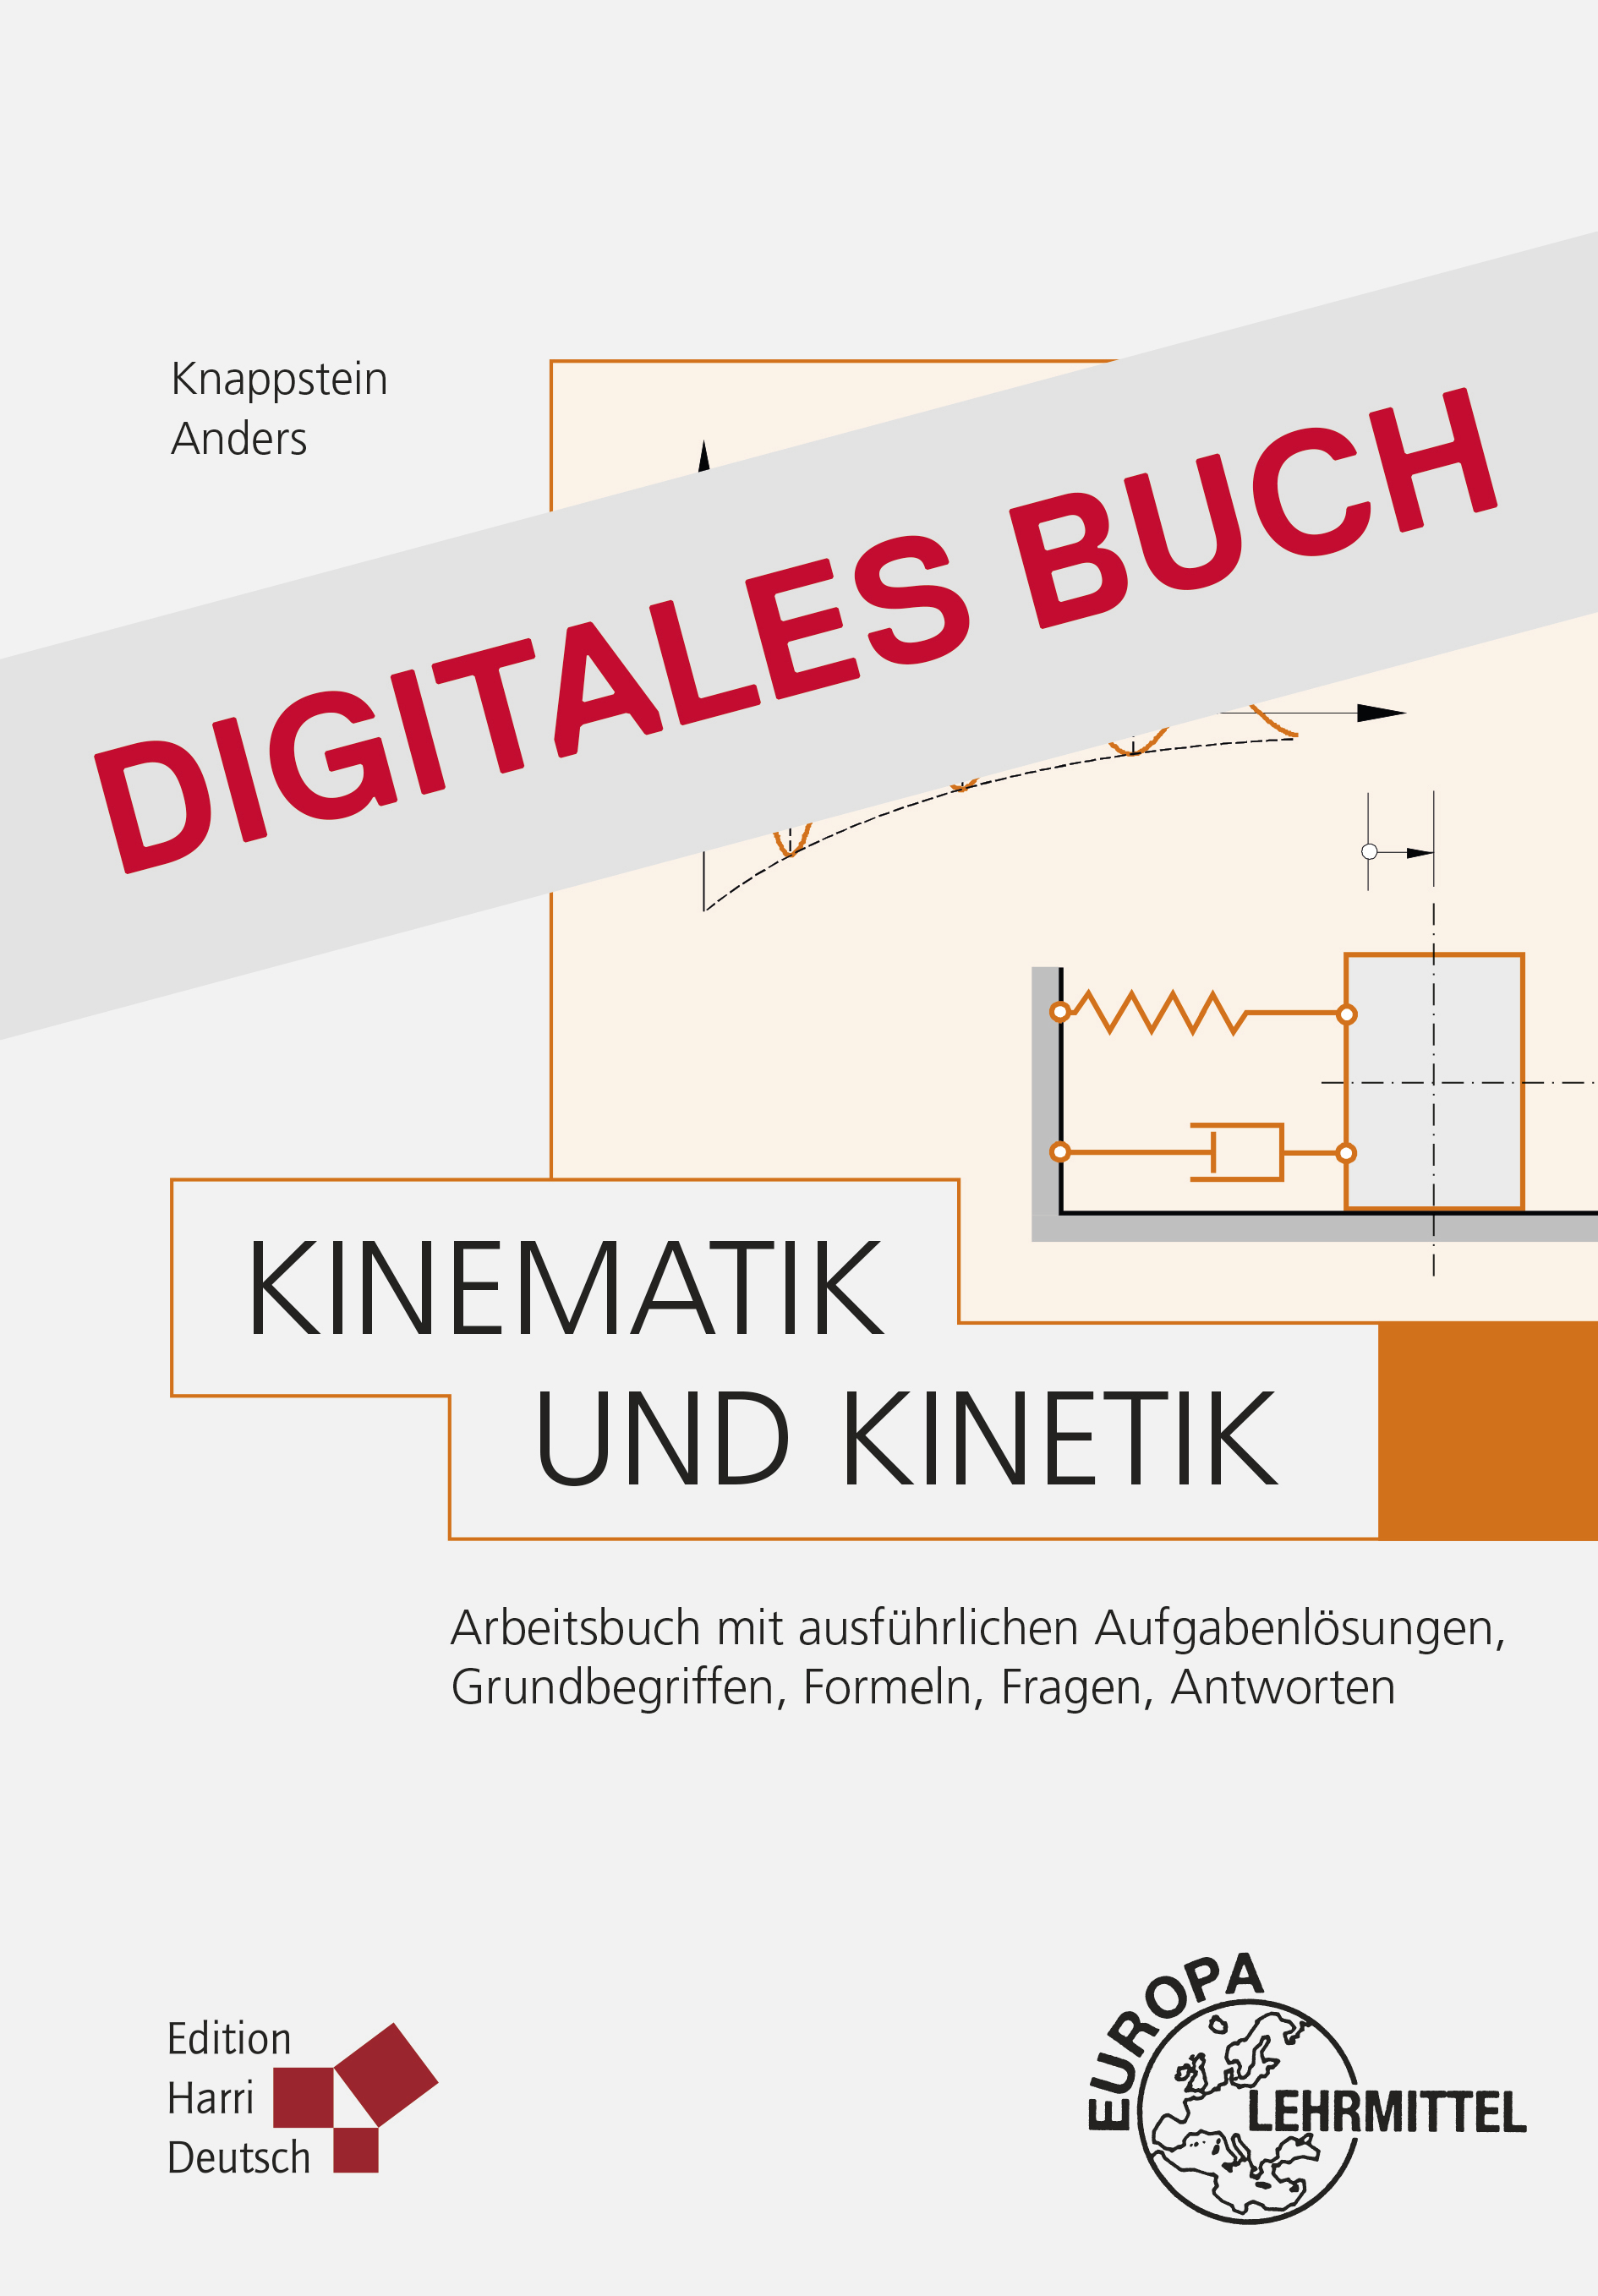 Kinematik und Kinetik - Digitales Buch